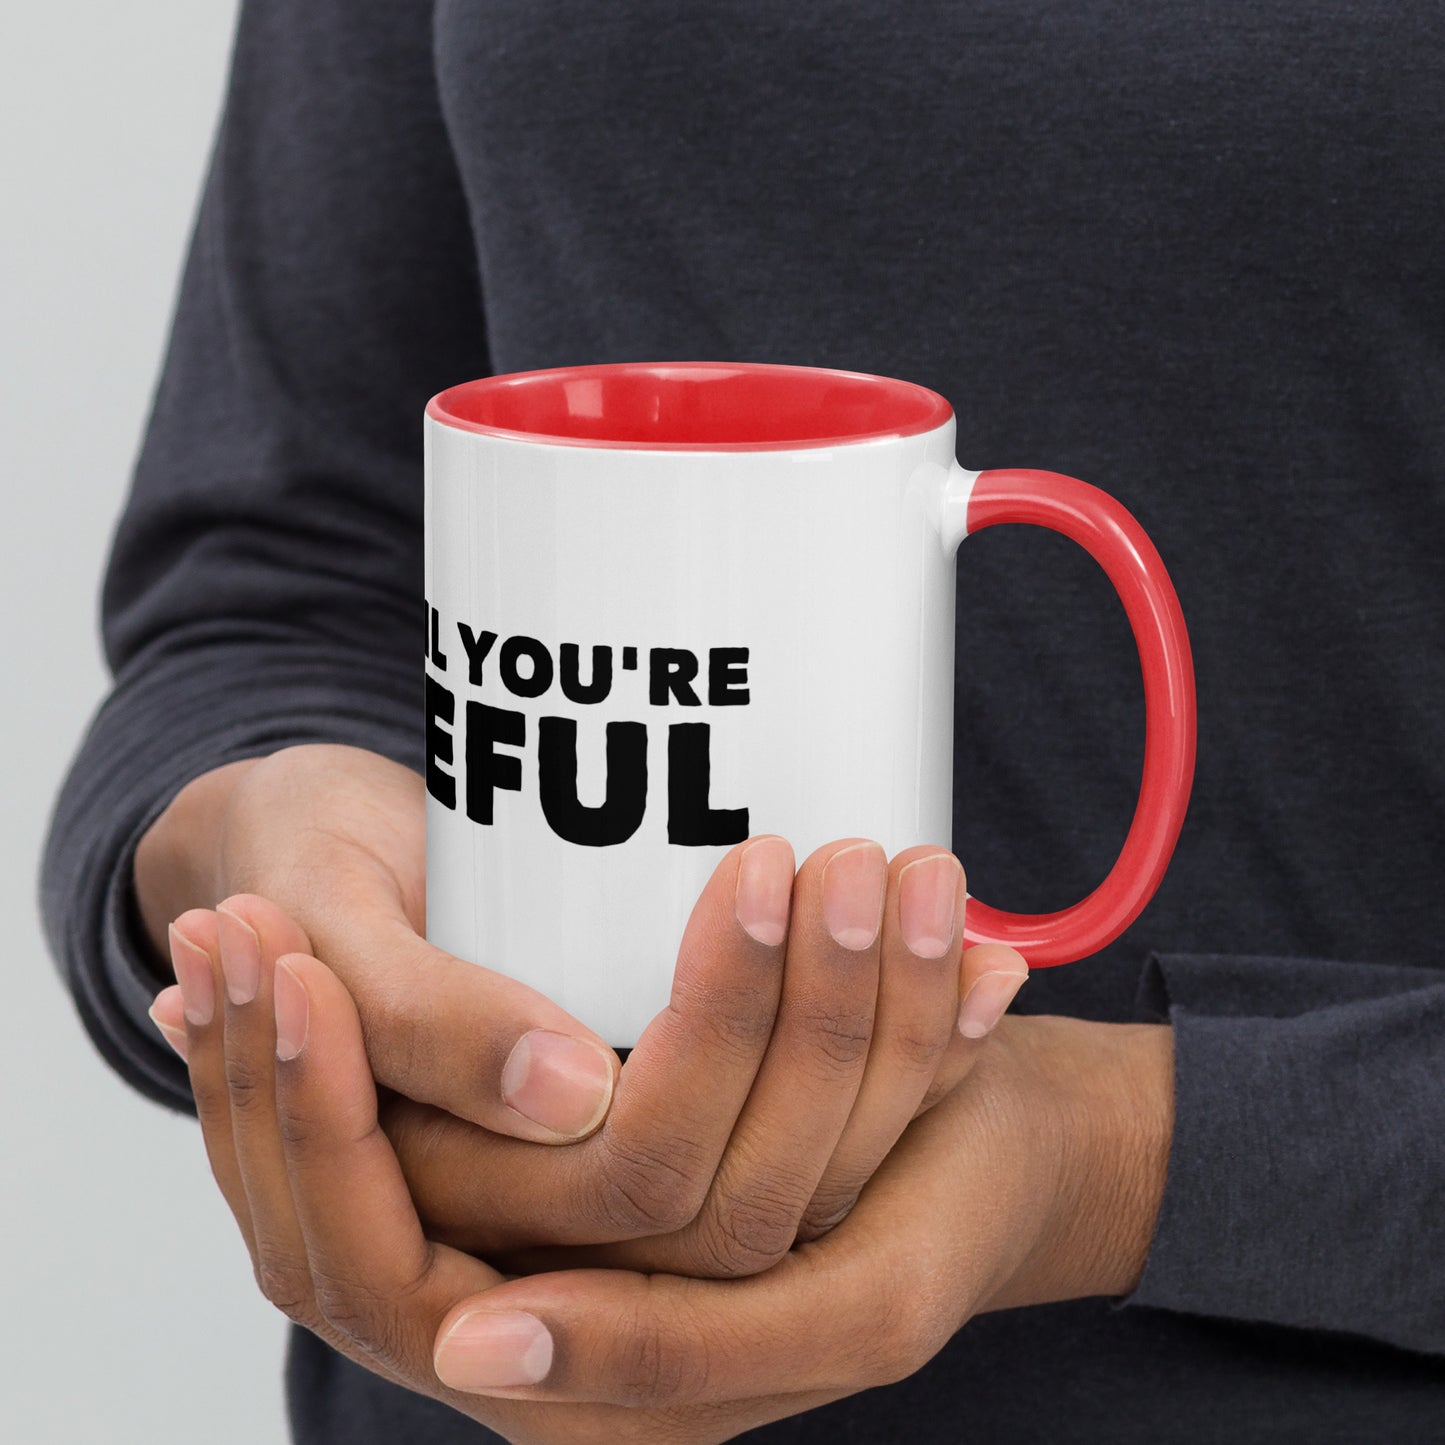 Smoke It Til You're Grateful Coffee Mug